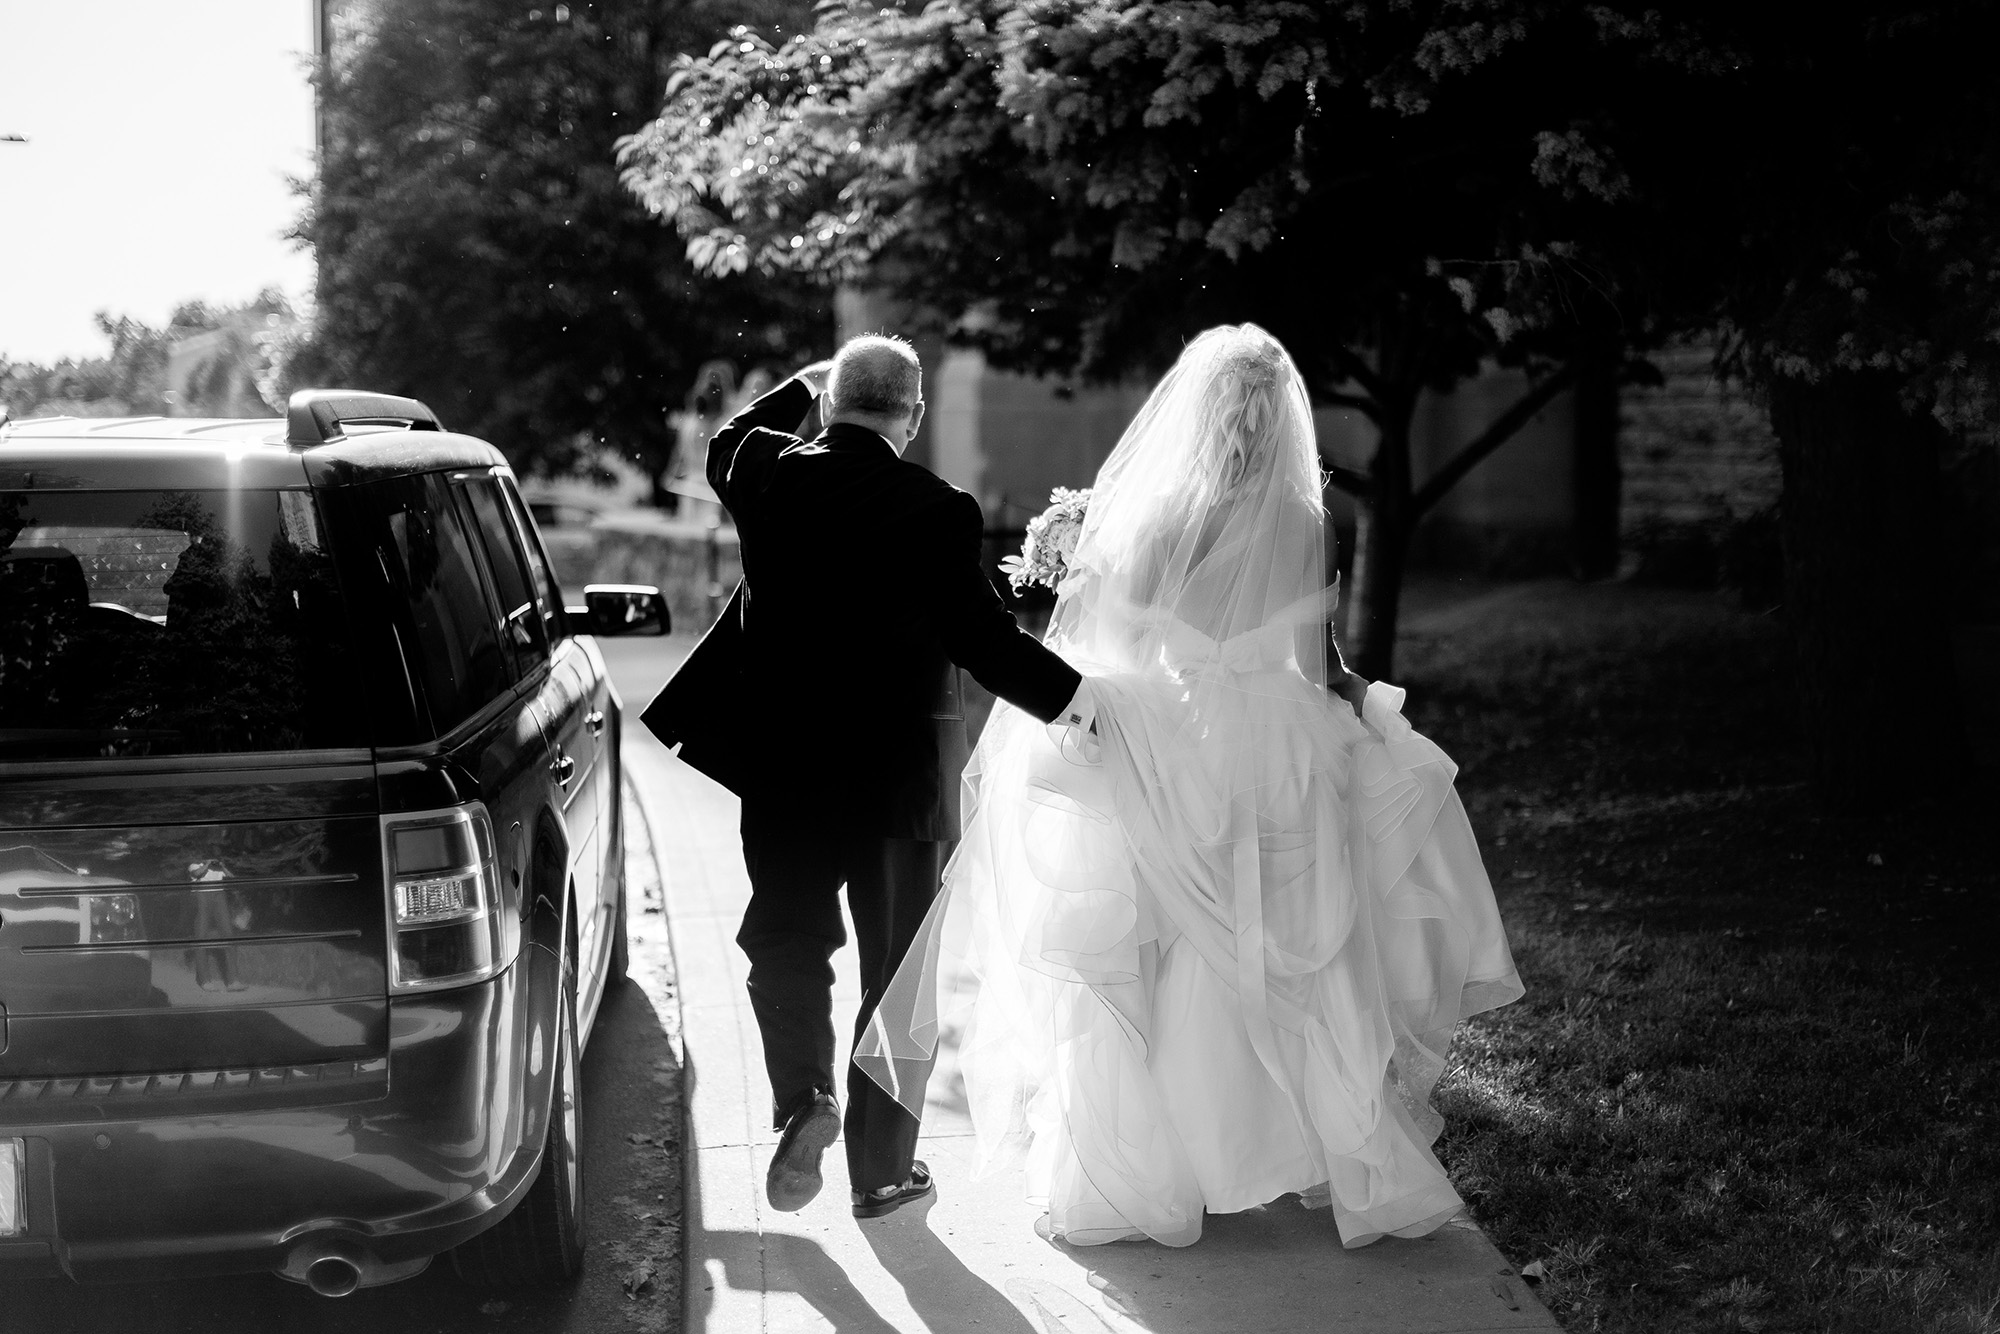 Kansas City Creative Wedding Photographer Rusty WrightKansas City Creative Wedding Photographer Rusty Wright